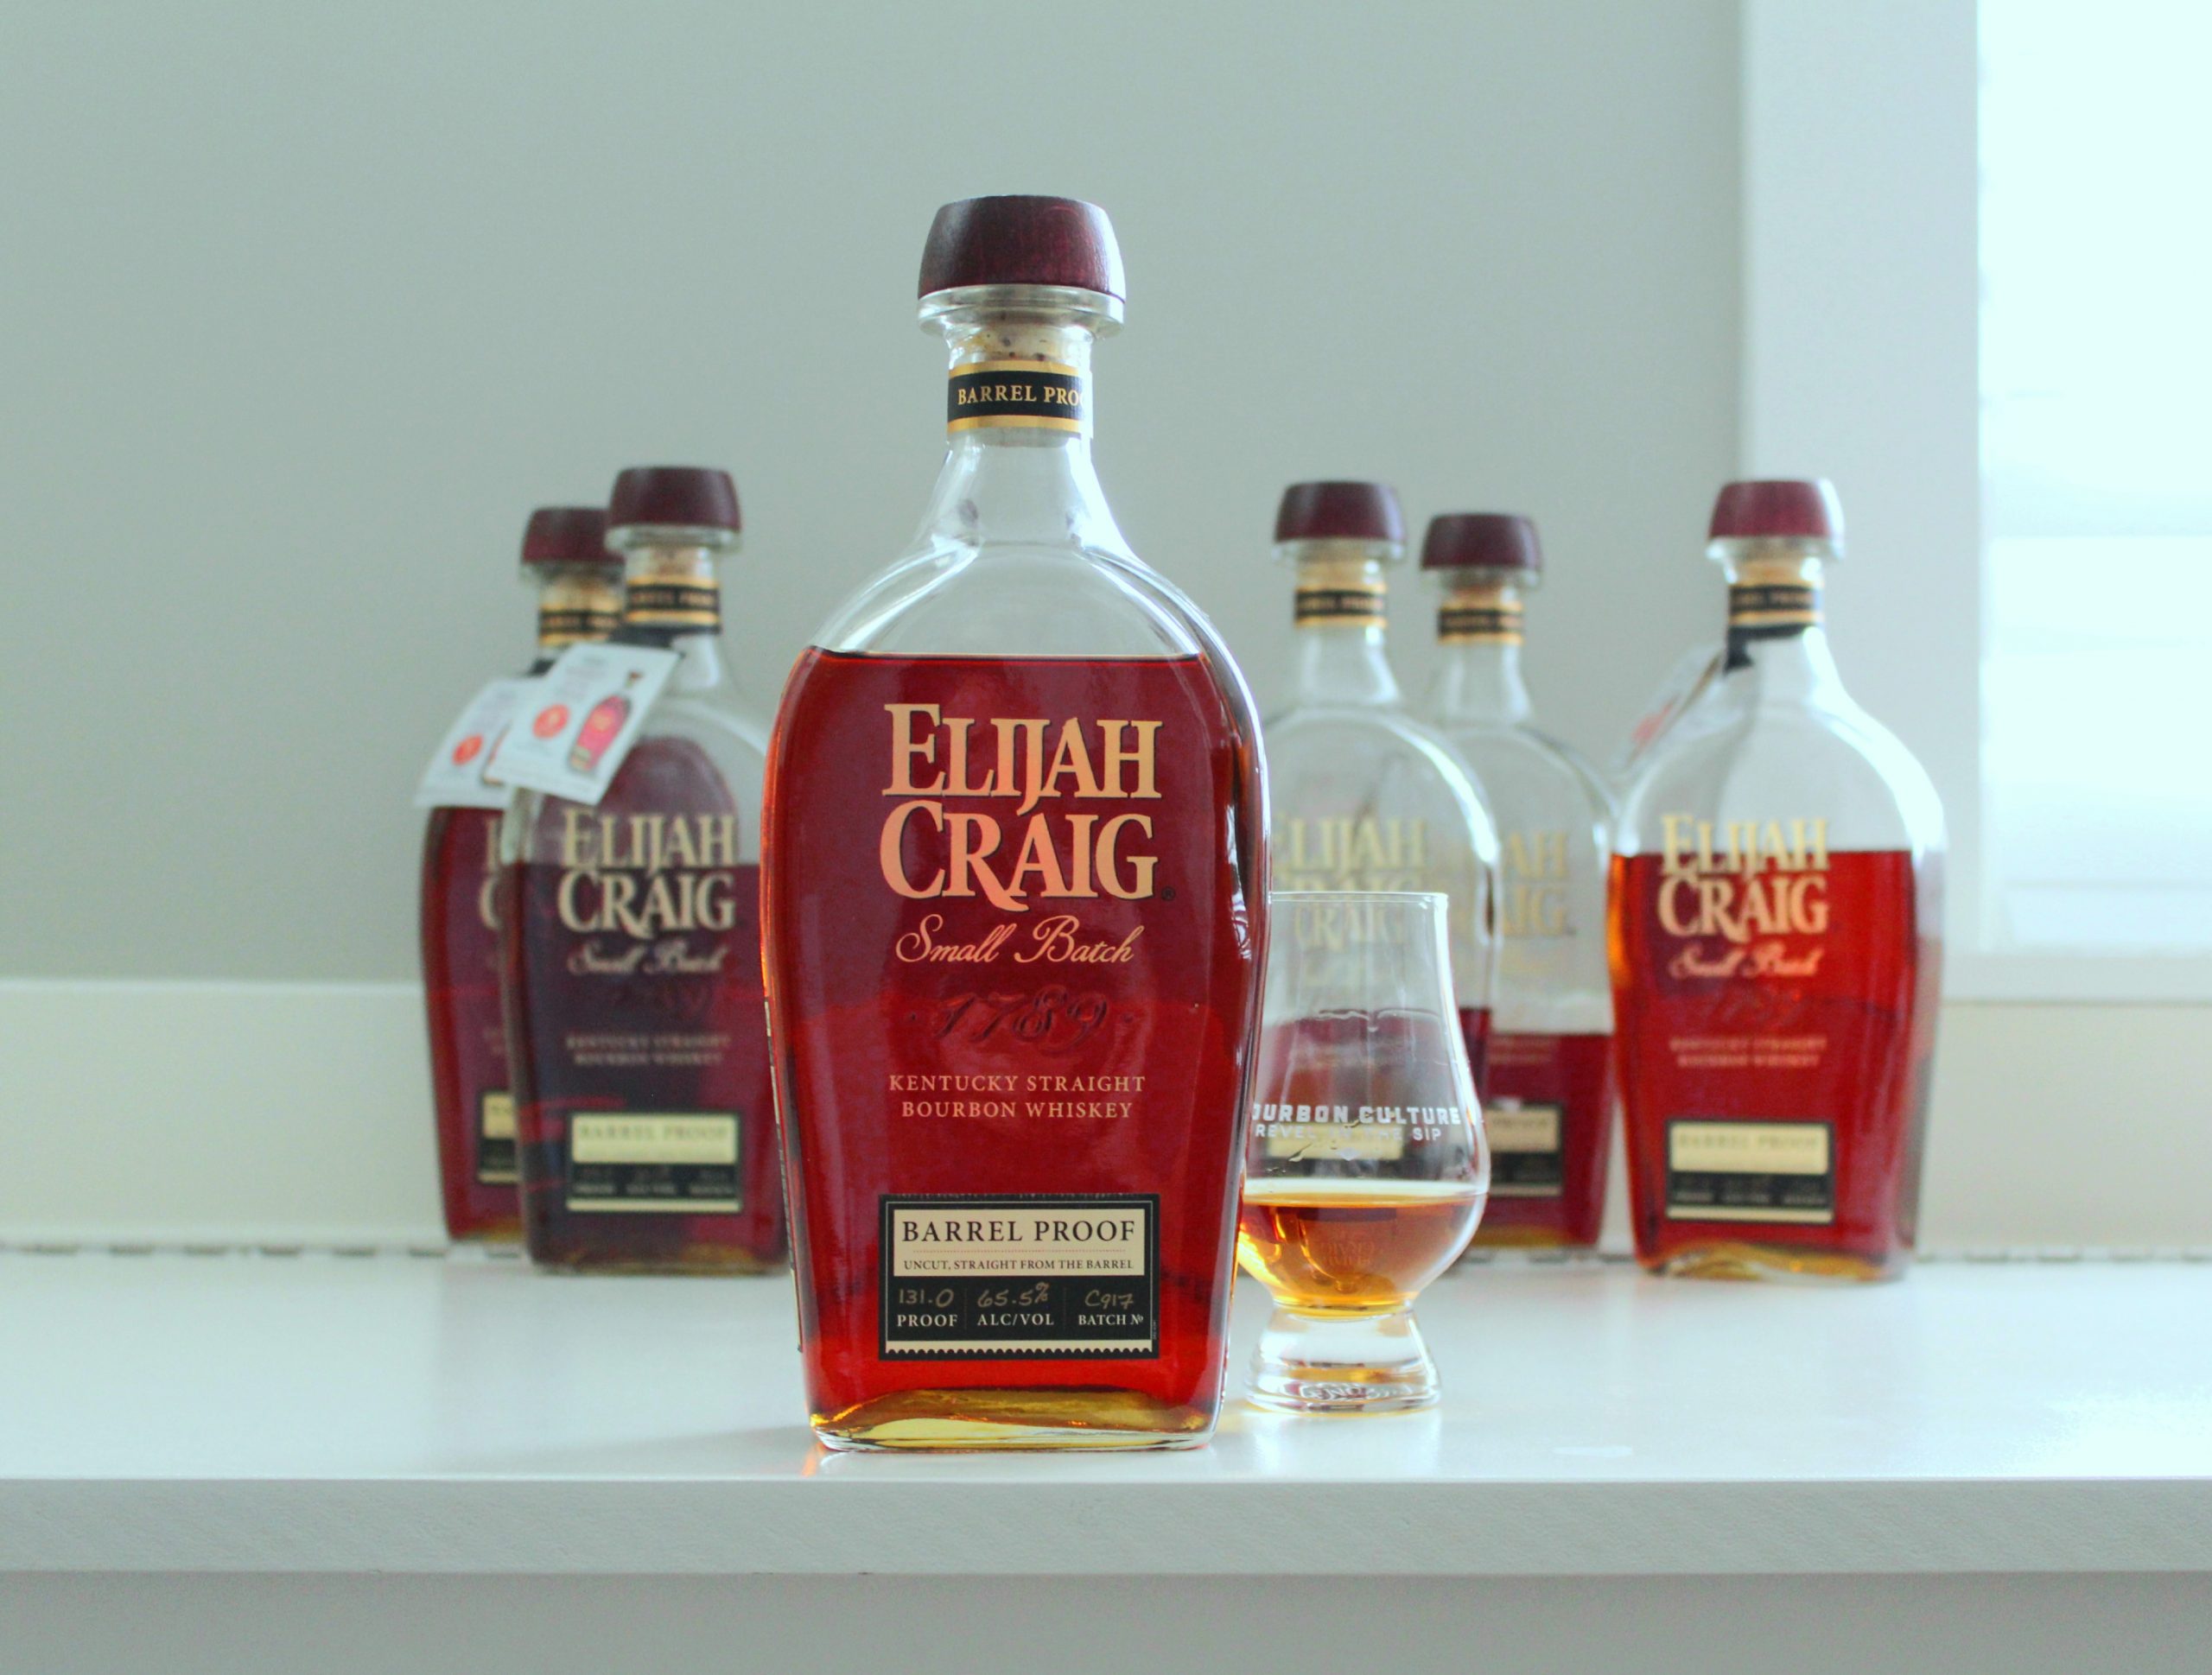 Elijah Craig Barrel Proof Bourbon Review (Batch C917)